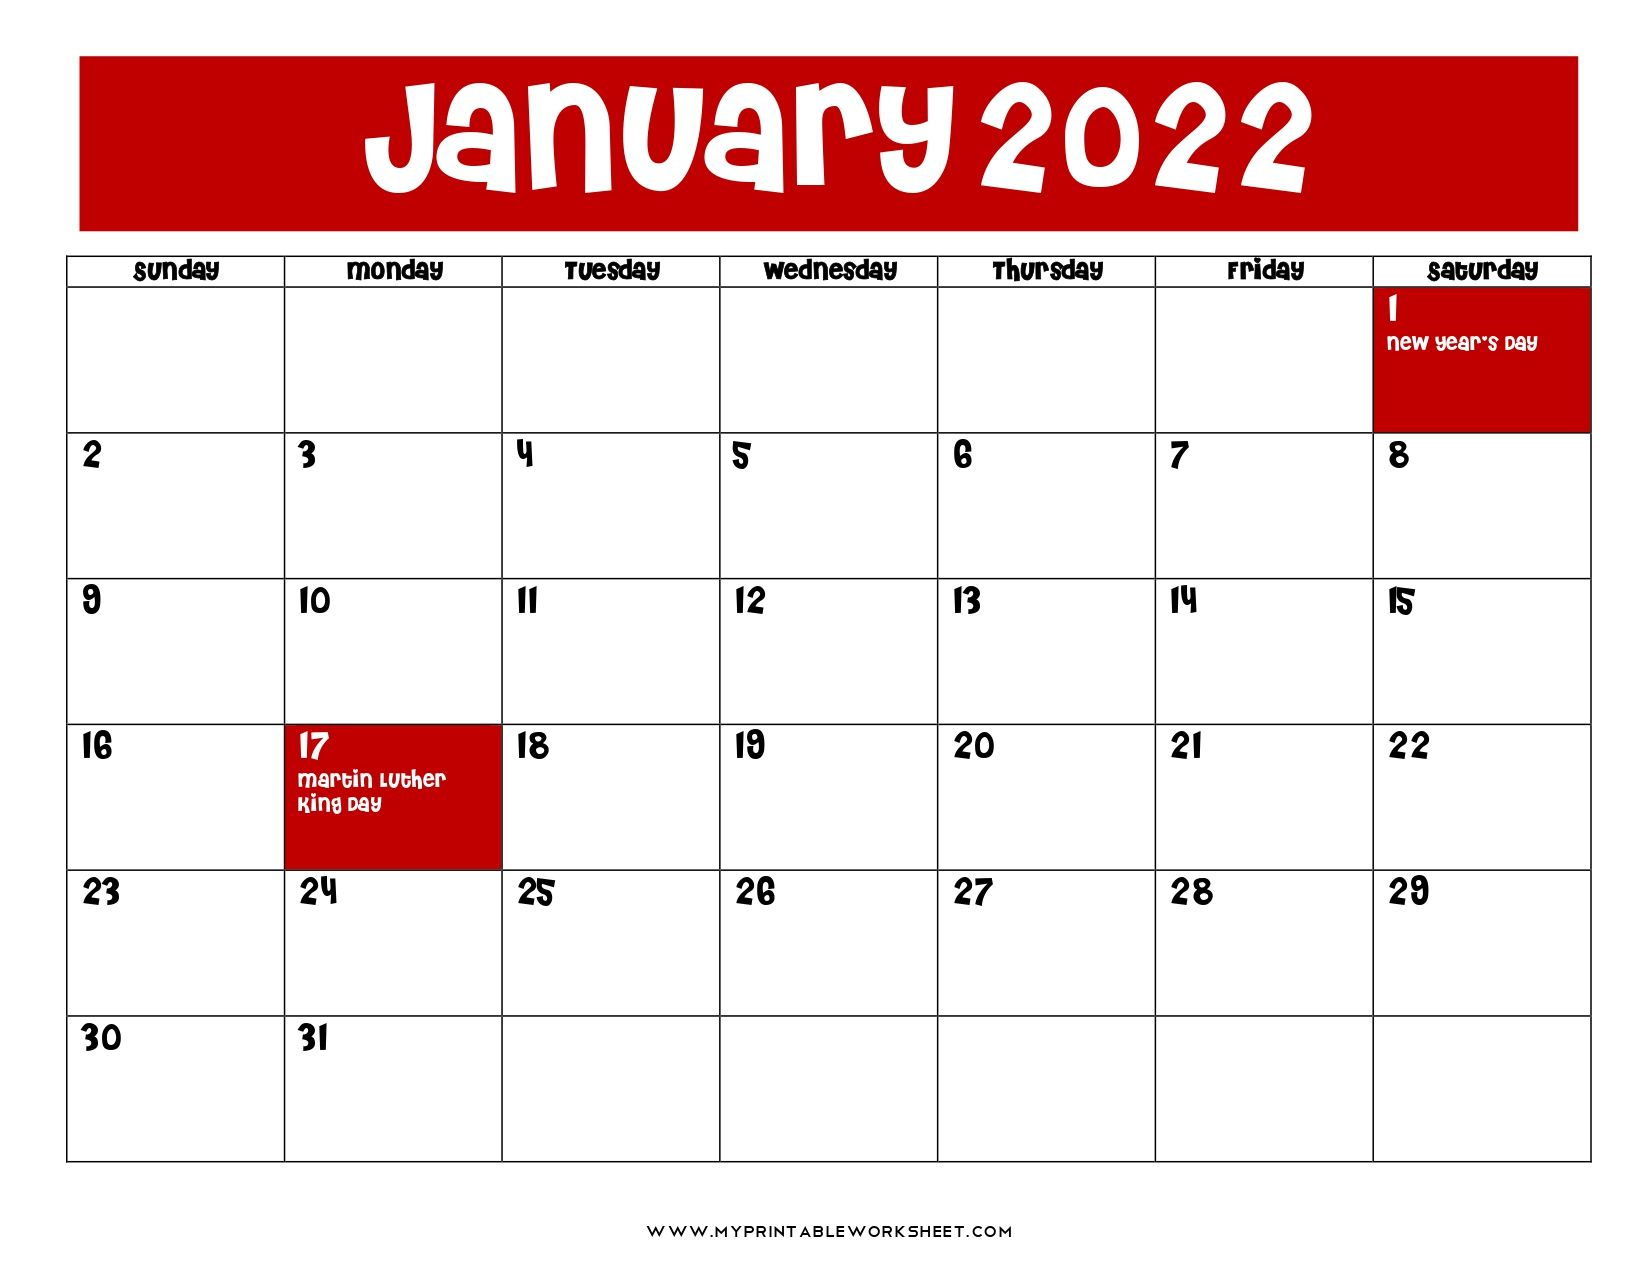 January 2022 Calendar With Holidays